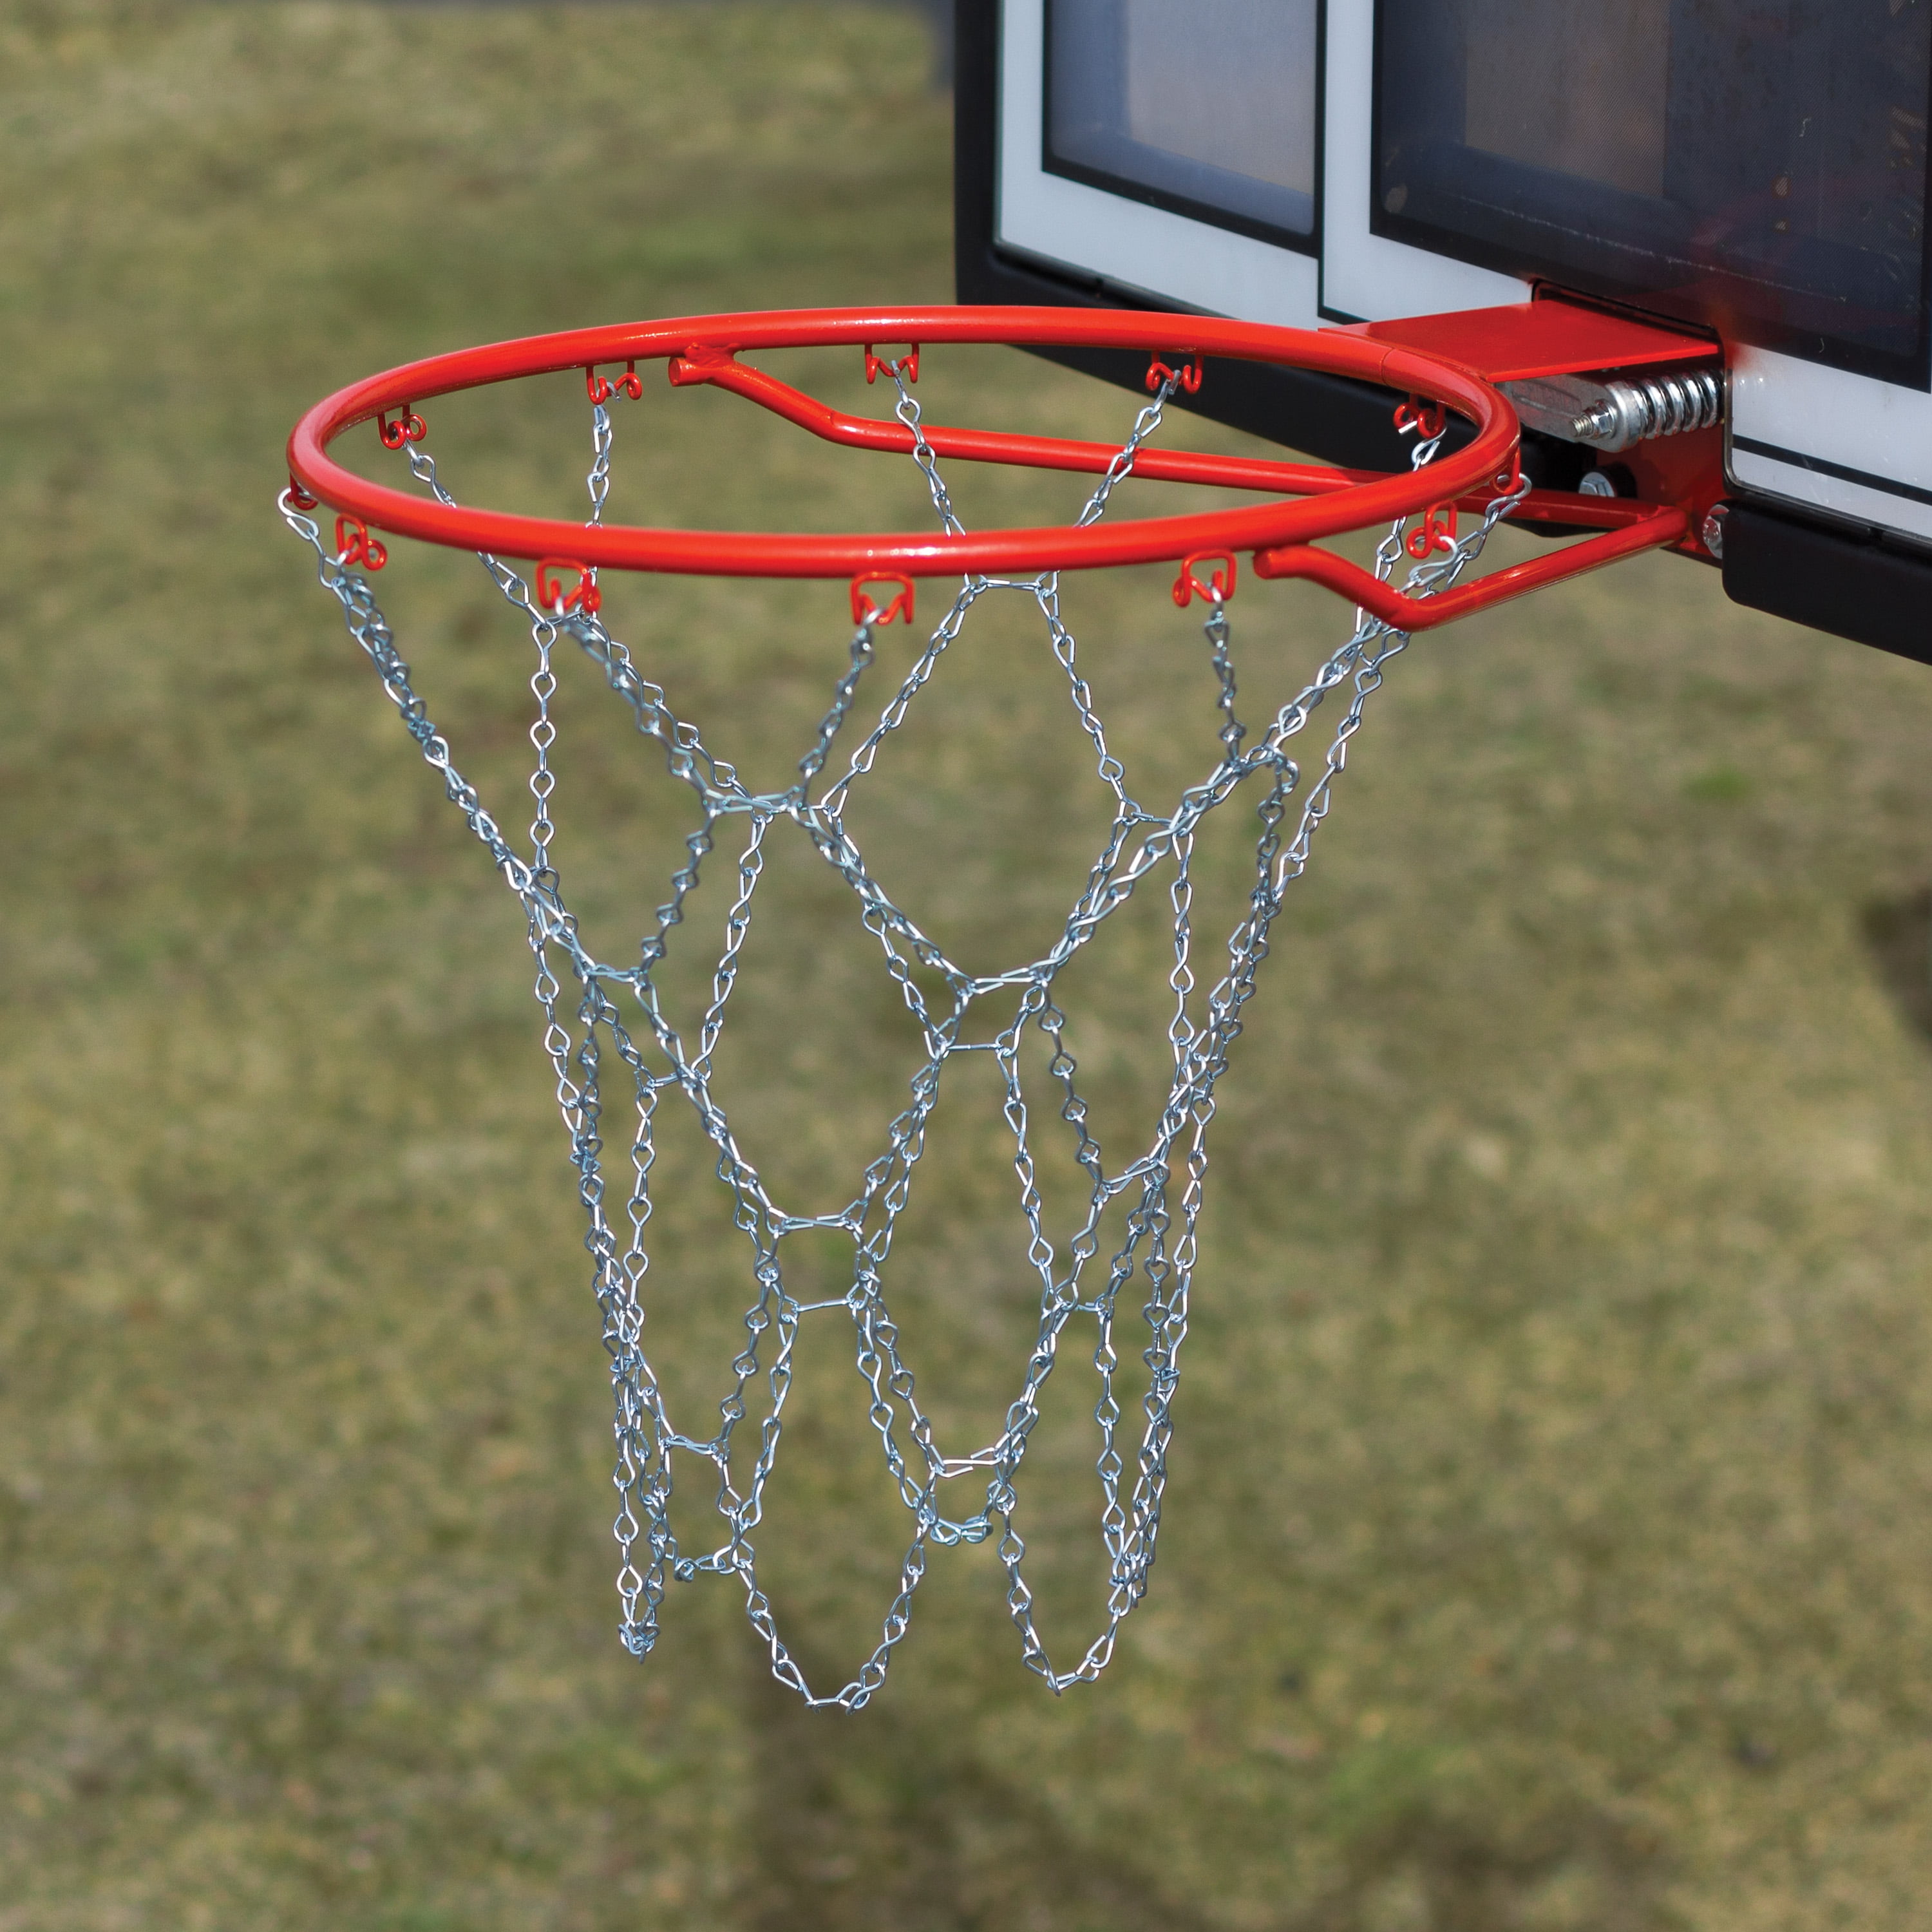 Heavy Duty Anti Rust Steel Chain Basketball Net Fits All Standard Basketball 